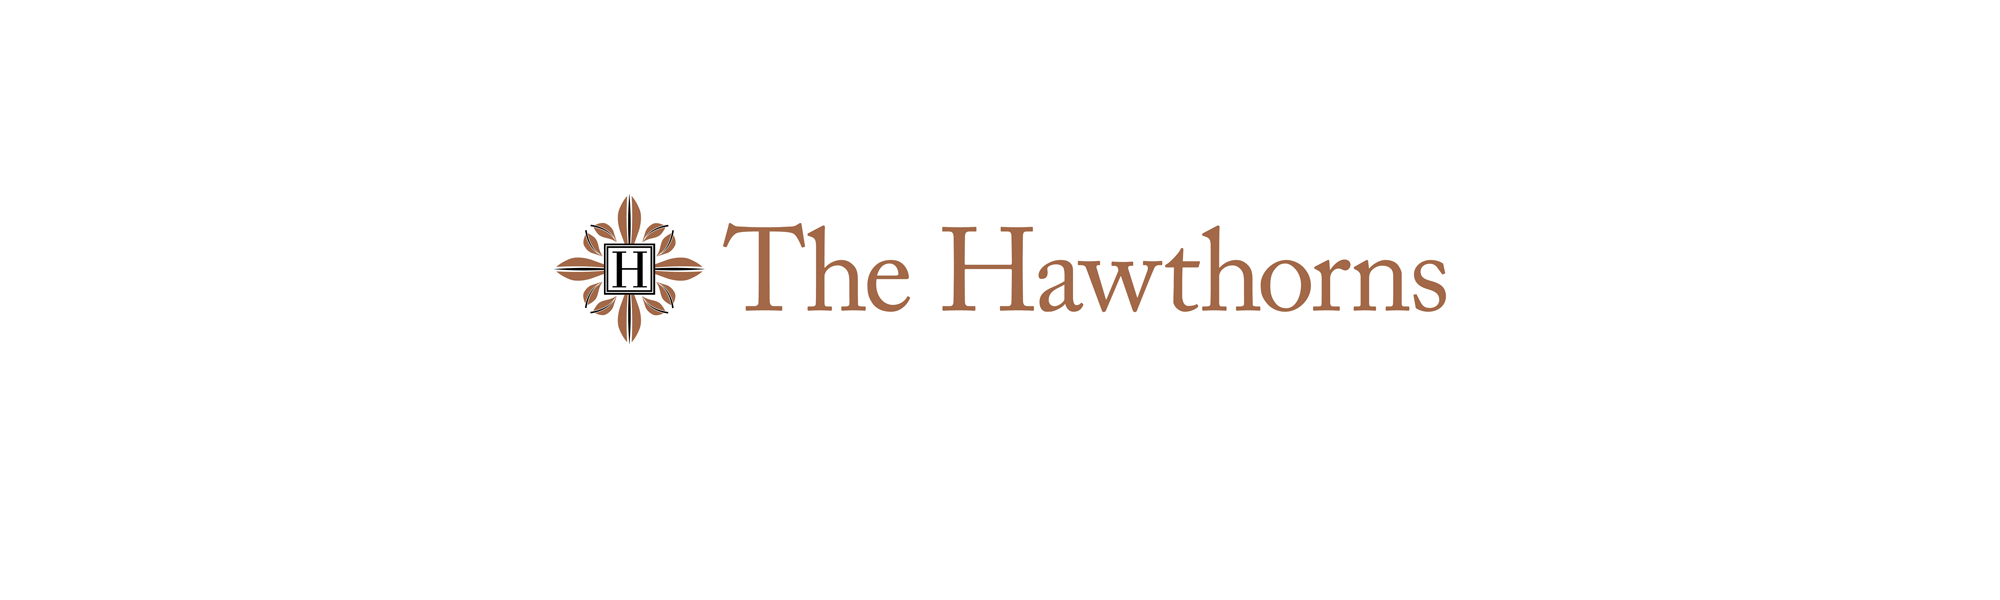 Hawthorns_logo_hero_Web_Banner